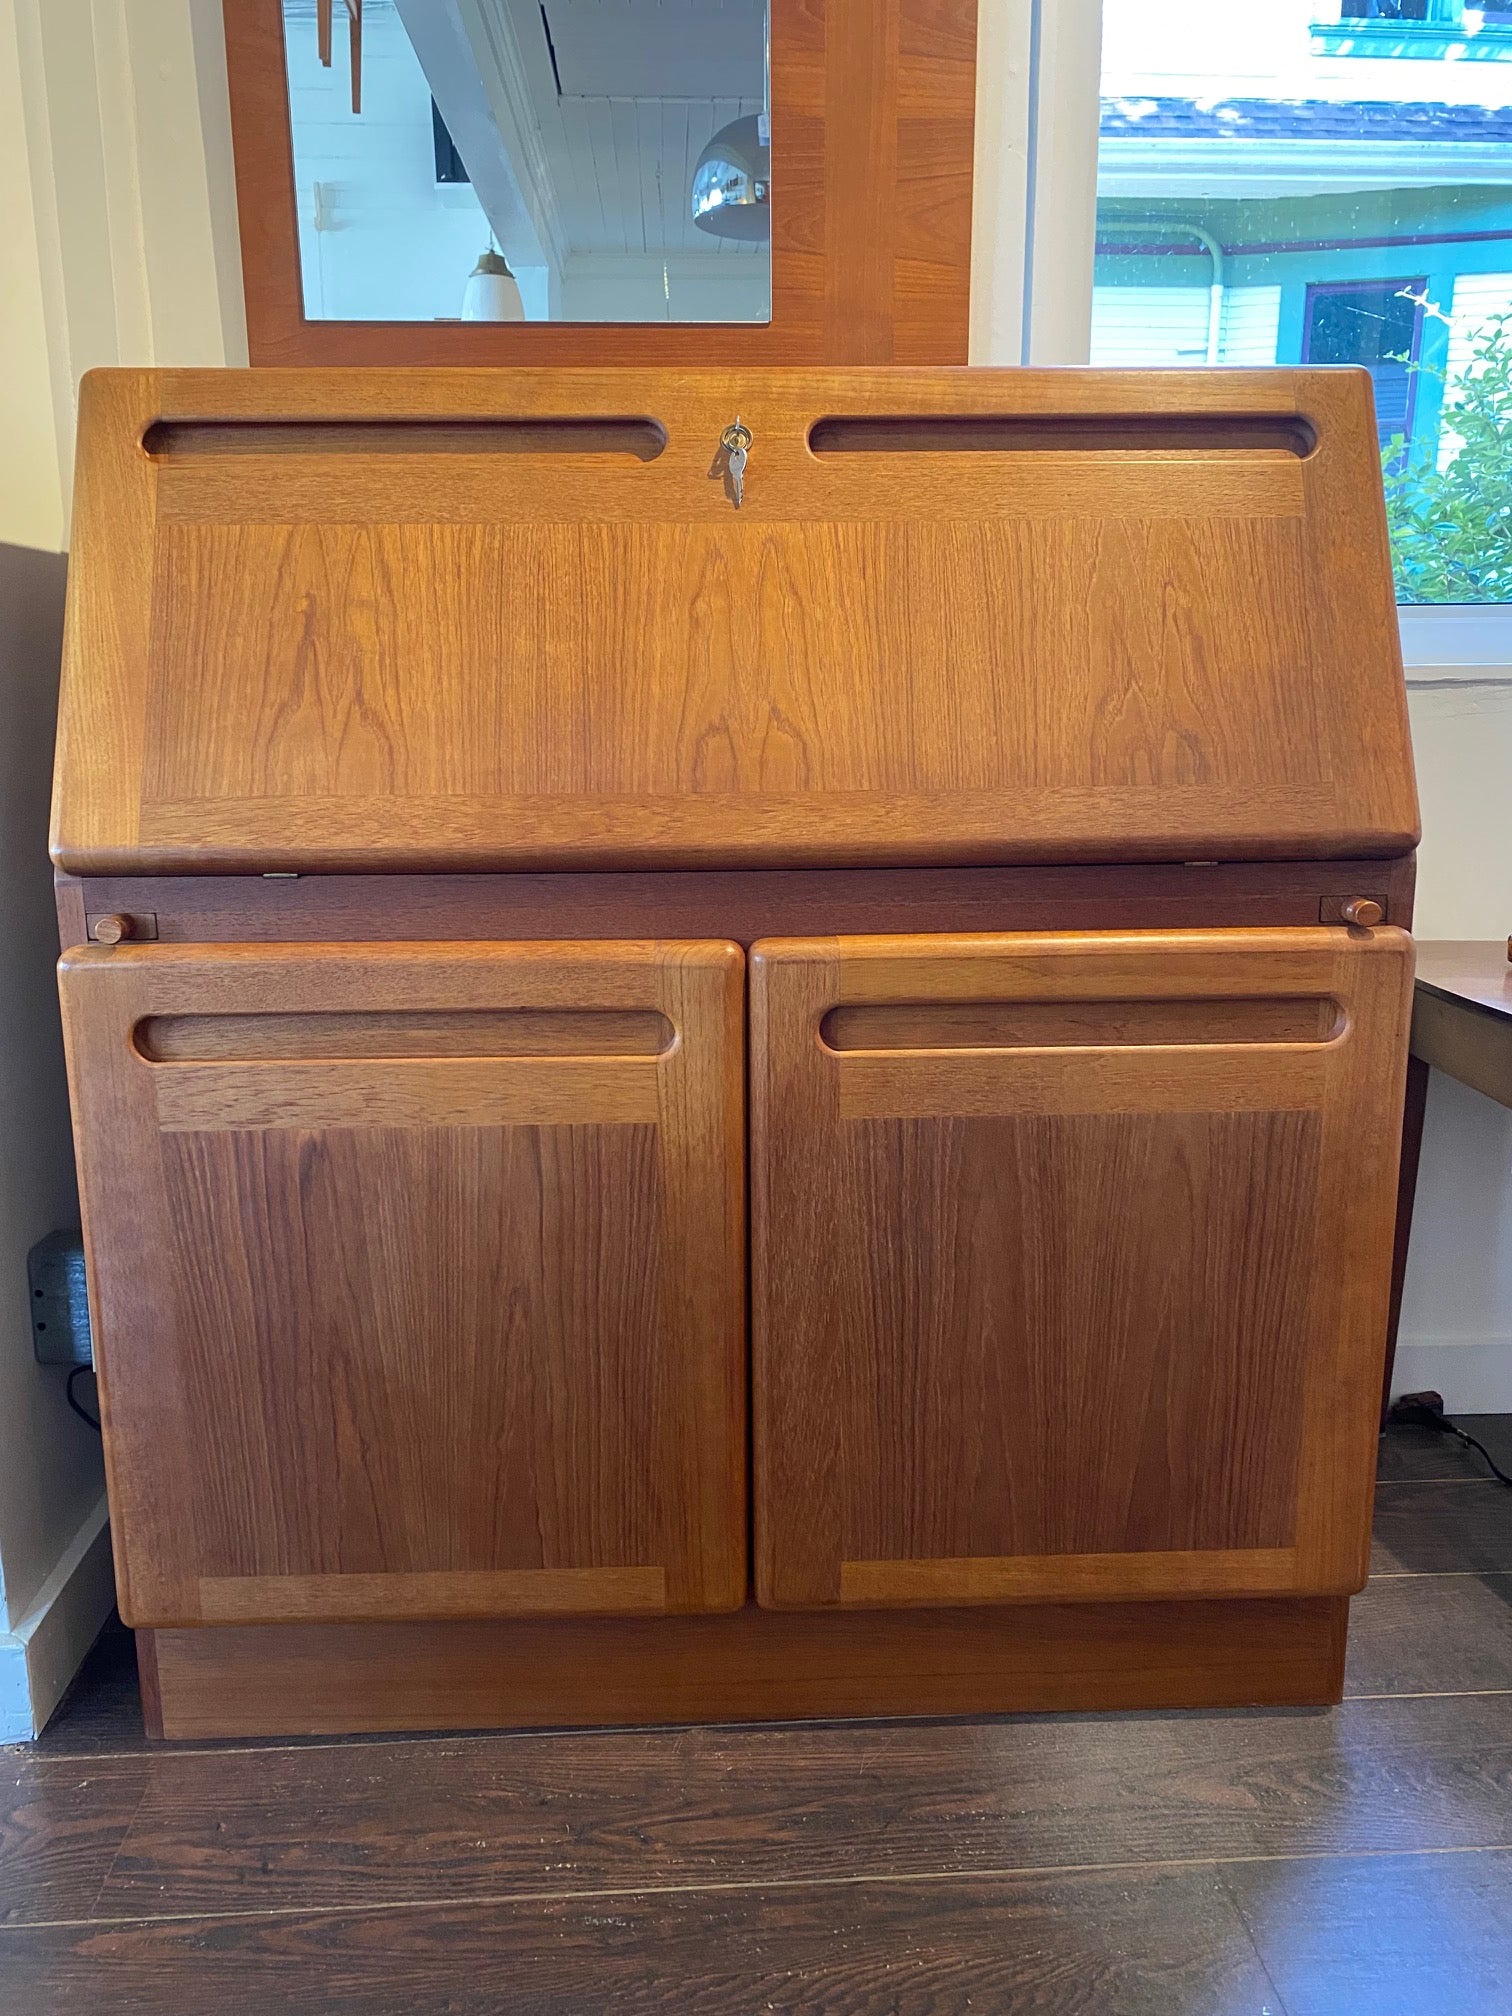 Danish midcentury teak desk for home office with carved handled lower cabinets- Cook Street Vintage